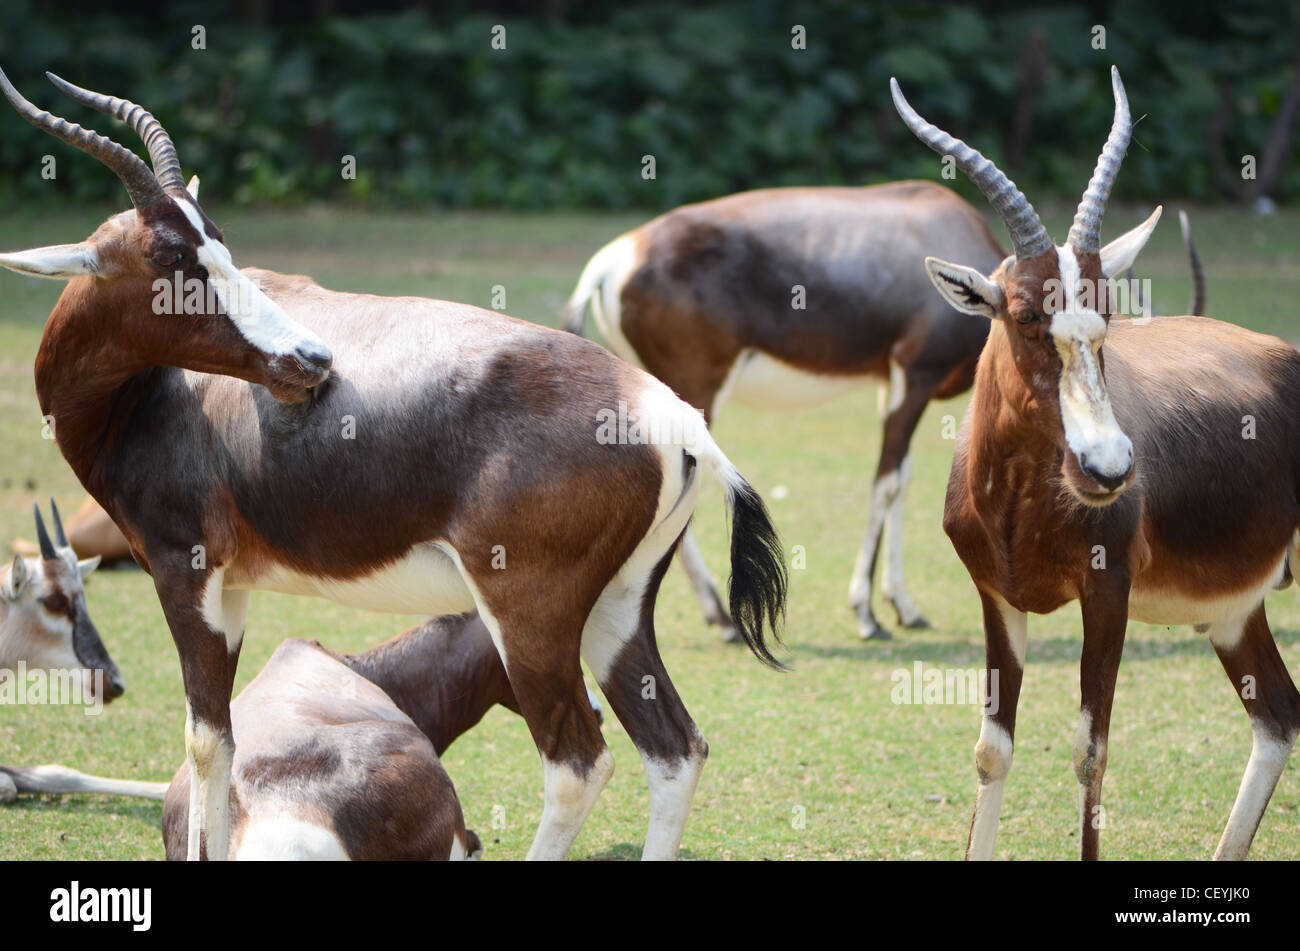 Blesbok antelope fauna Stock Photo